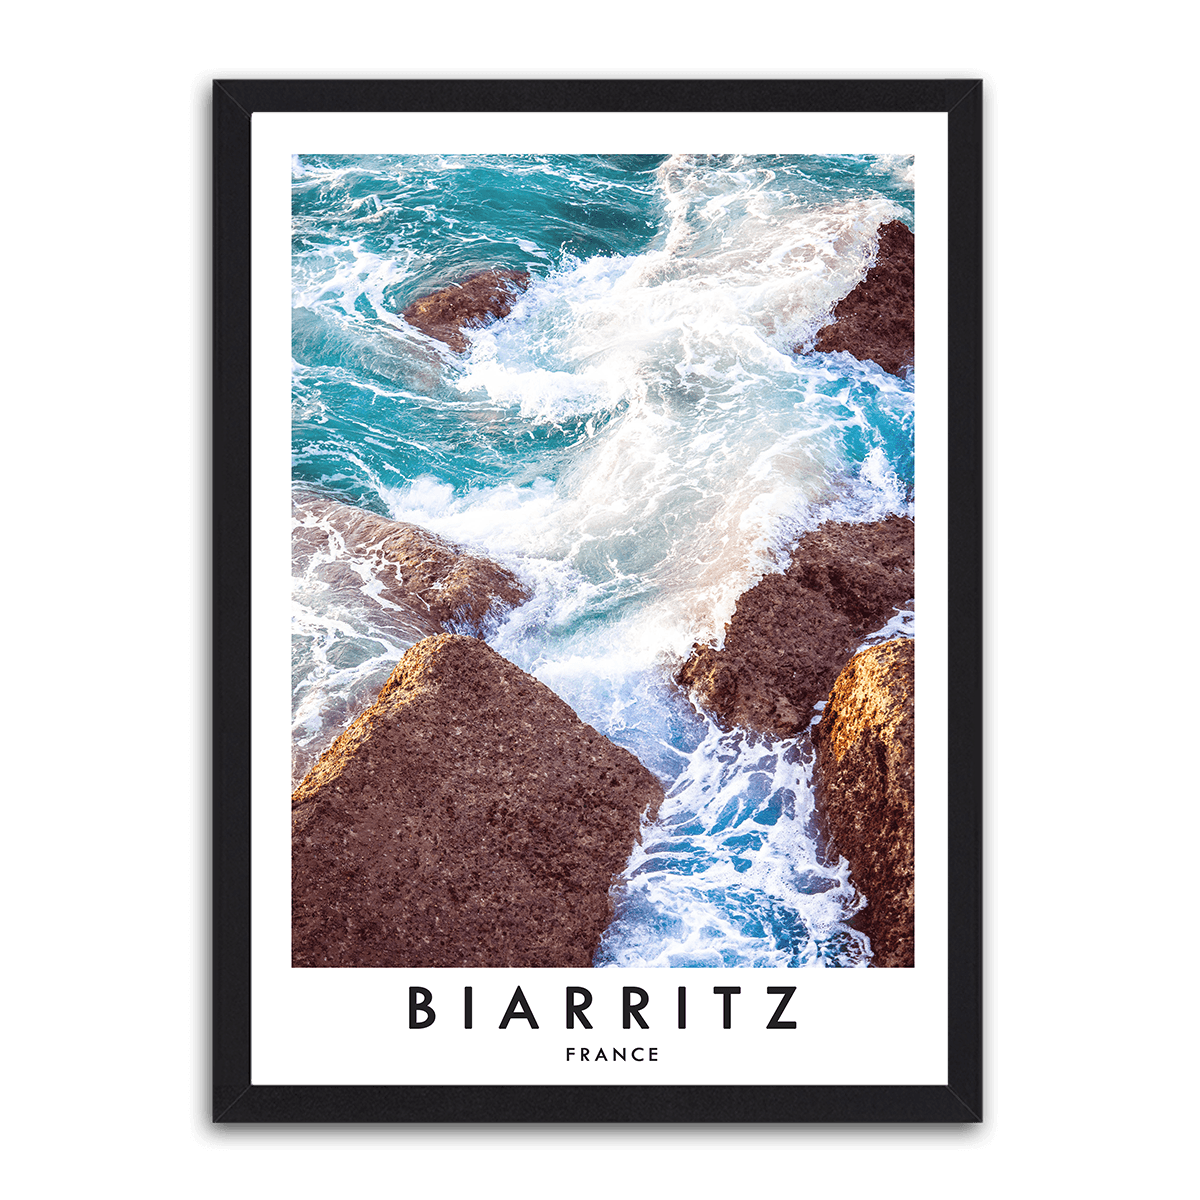 Azure Rush - Biarritz, France - PixMagic